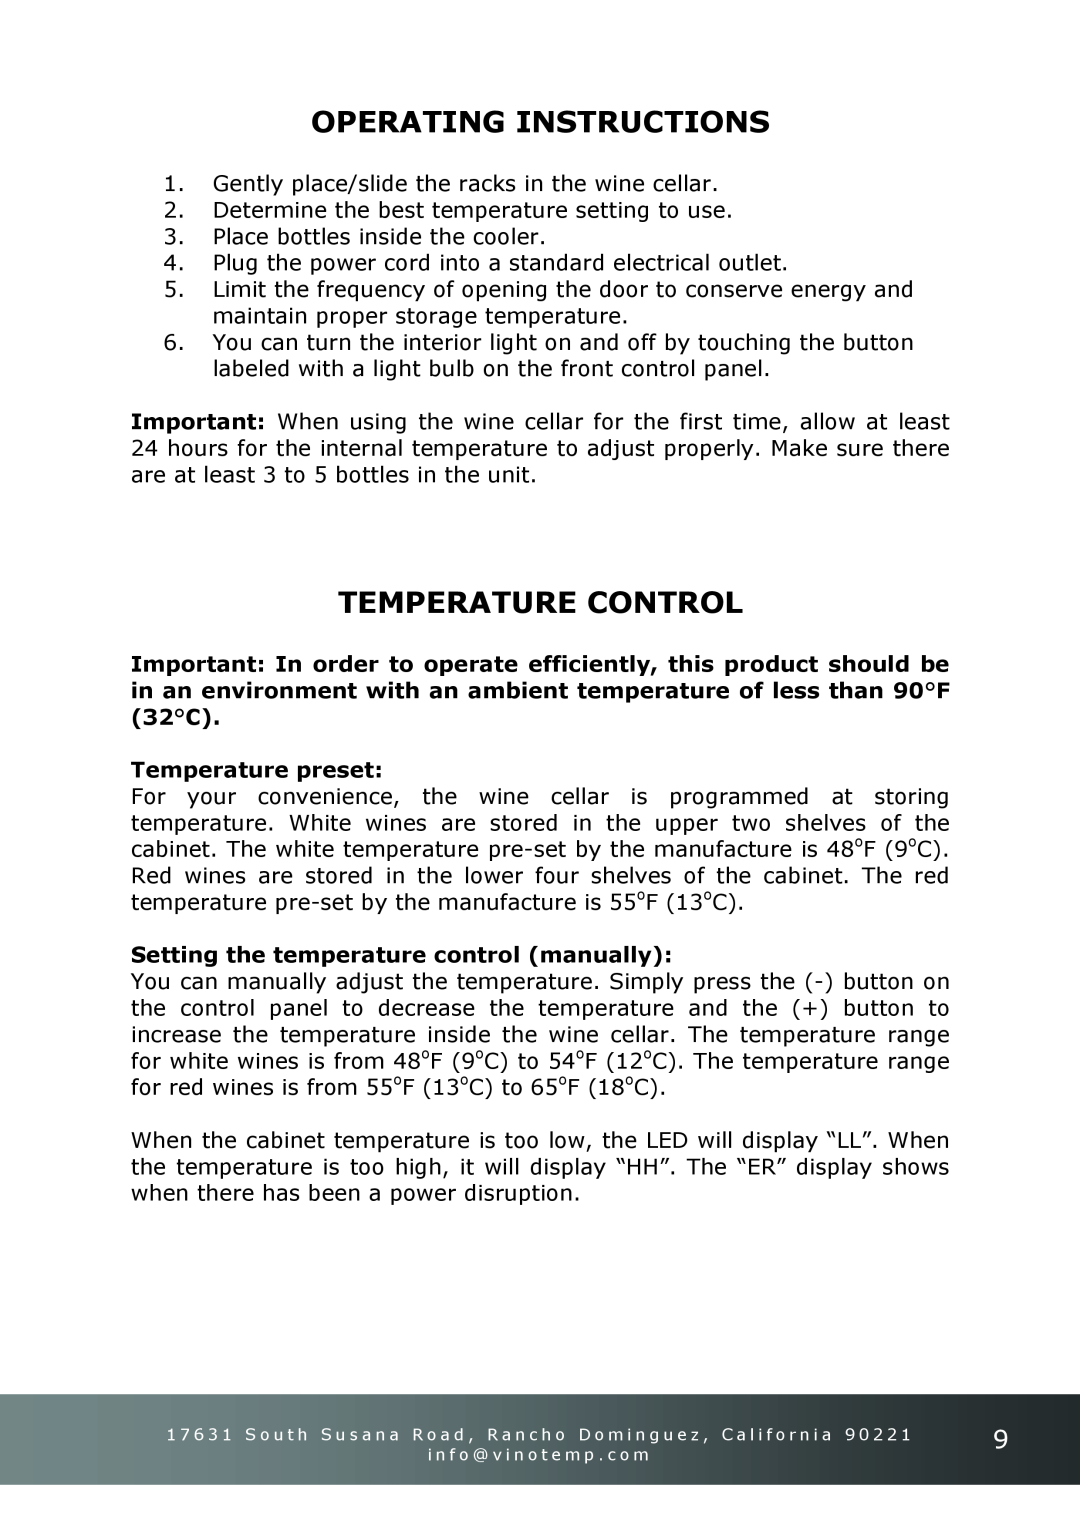 Vinotemp VT-34-2ZONE owner manual Operating Instructions, Temperature Control, Temperature preset 